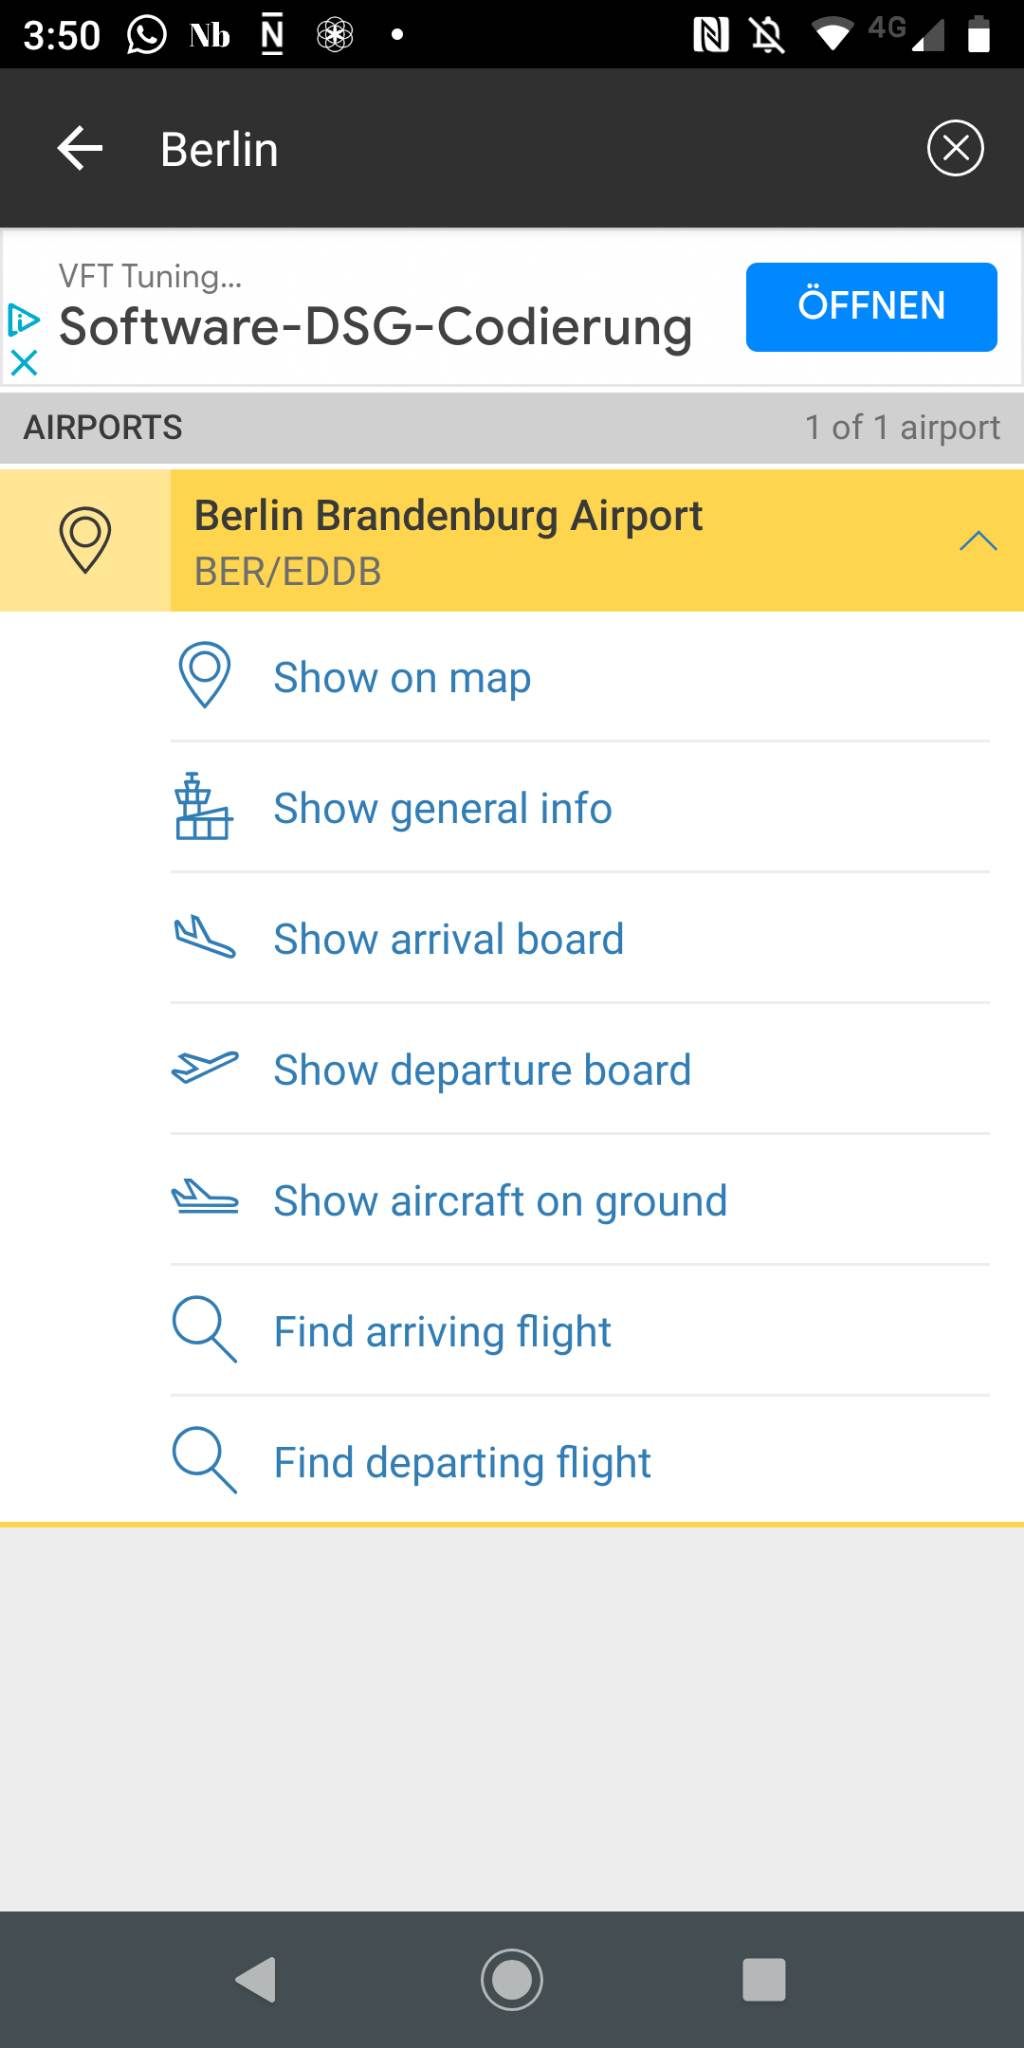 Flightrader24 screen airport selection screen